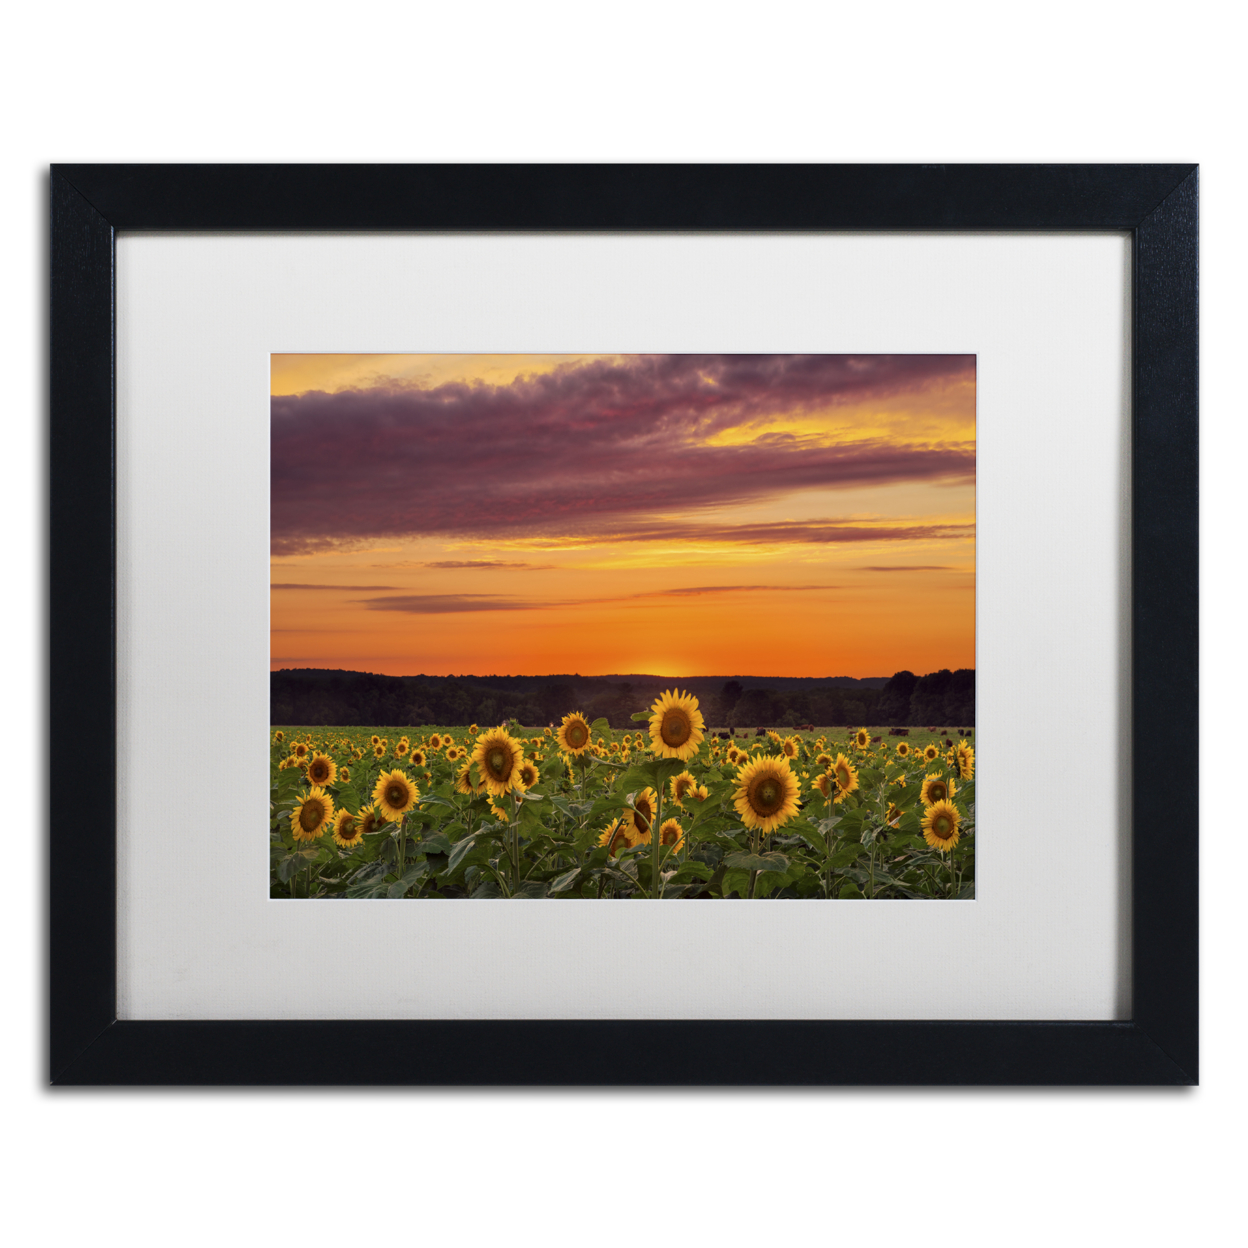 Michael Blanchette Photography 'Sunflower Sunset' Black Wooden Framed Art 18 X 22 Inches